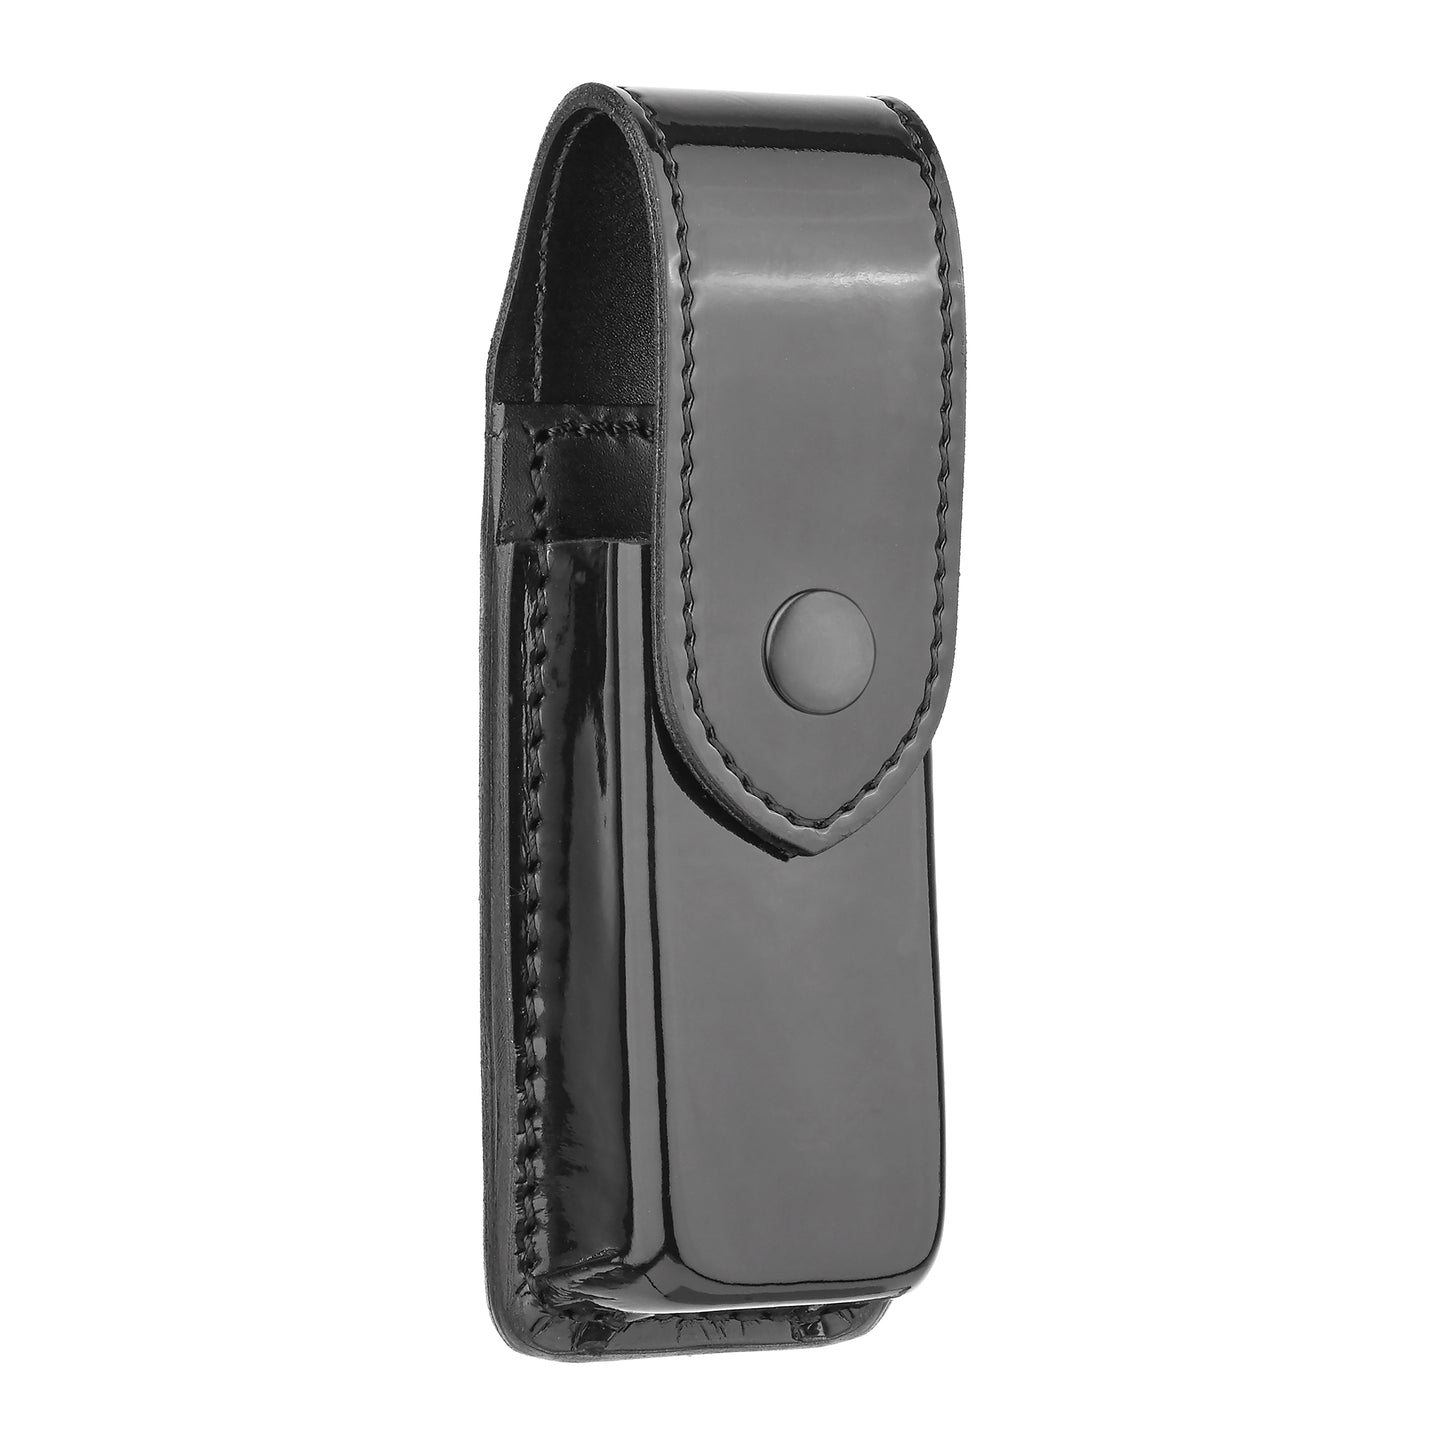 Clarino Leather Single Magazine Holder for 9mm